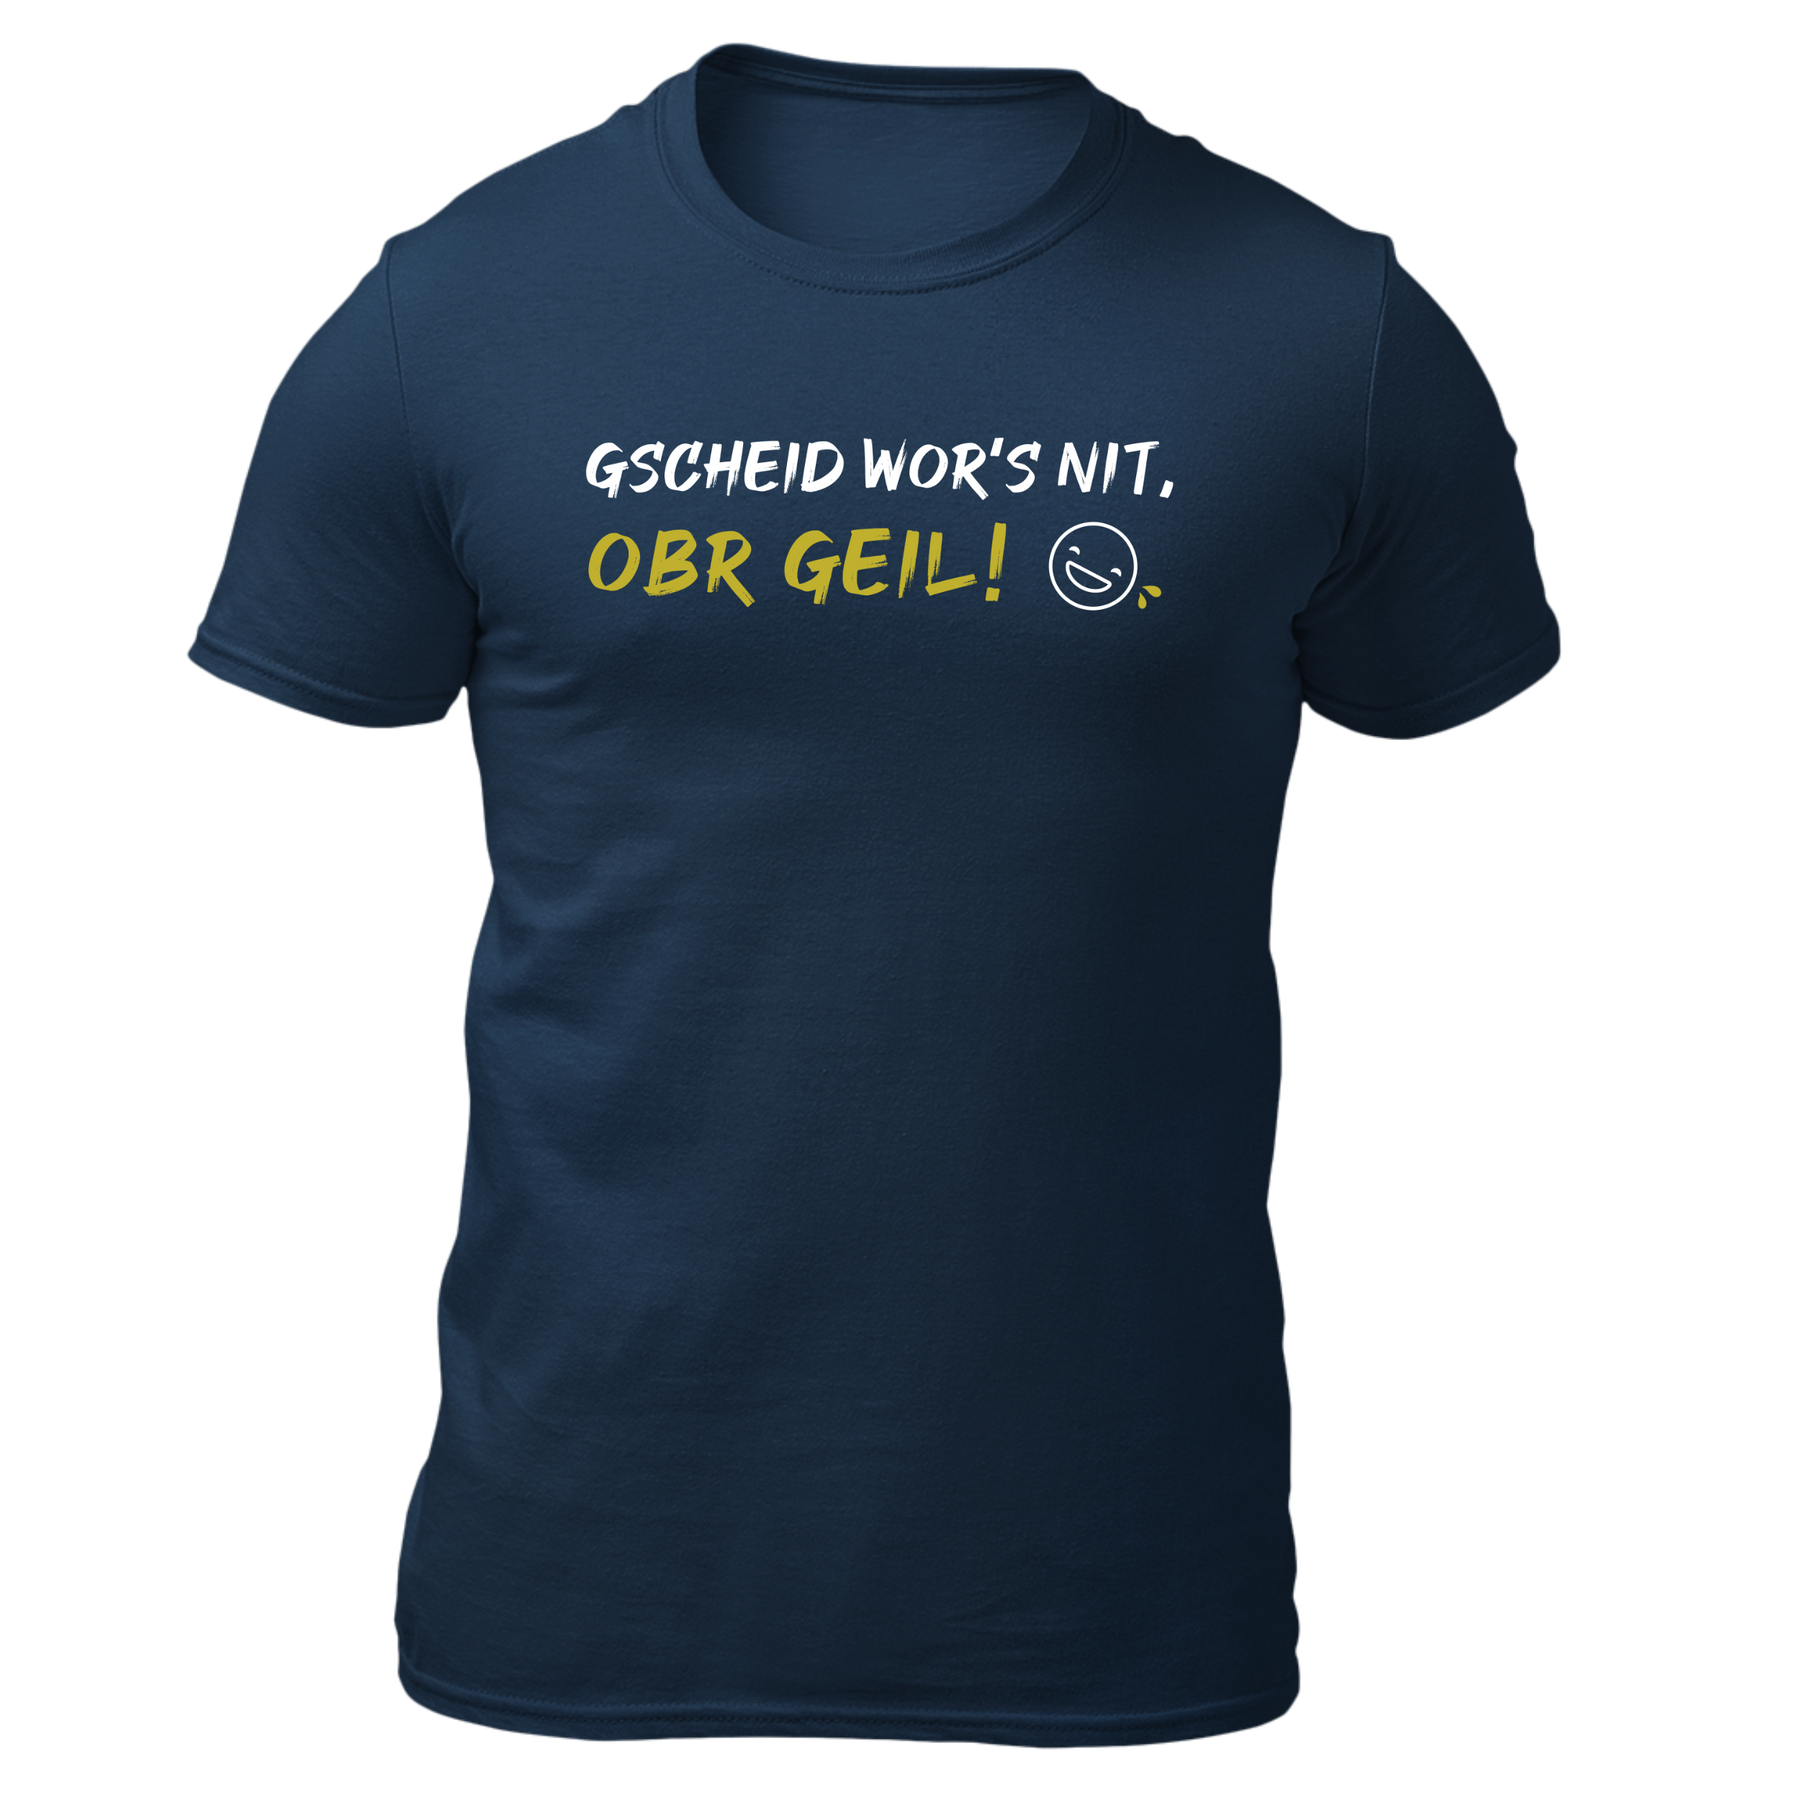 Gscheid wor’s nit obr geil - Herren Shirt Bio - Navy / S - Shirts & Tops